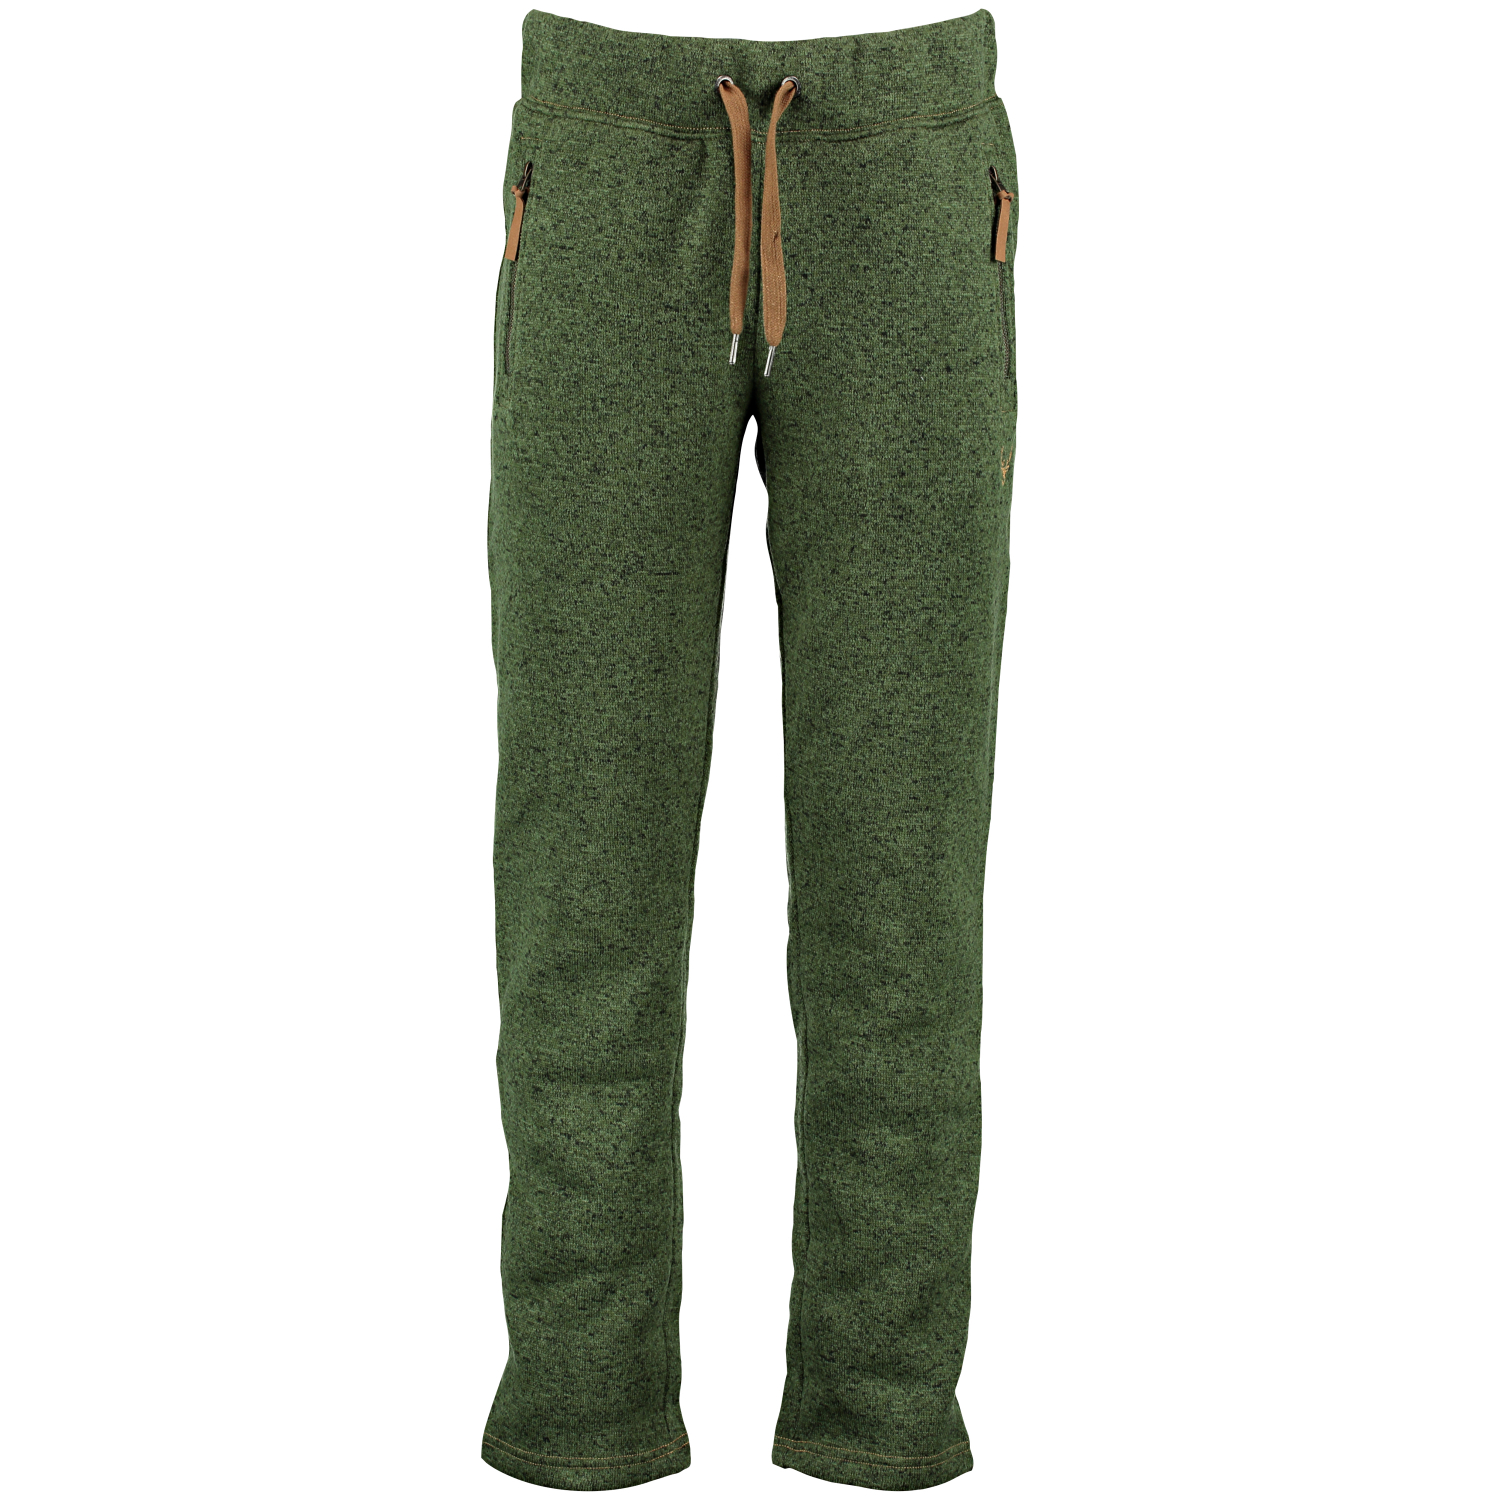 OS Trachten Women's Sweatpants (traditional green) 